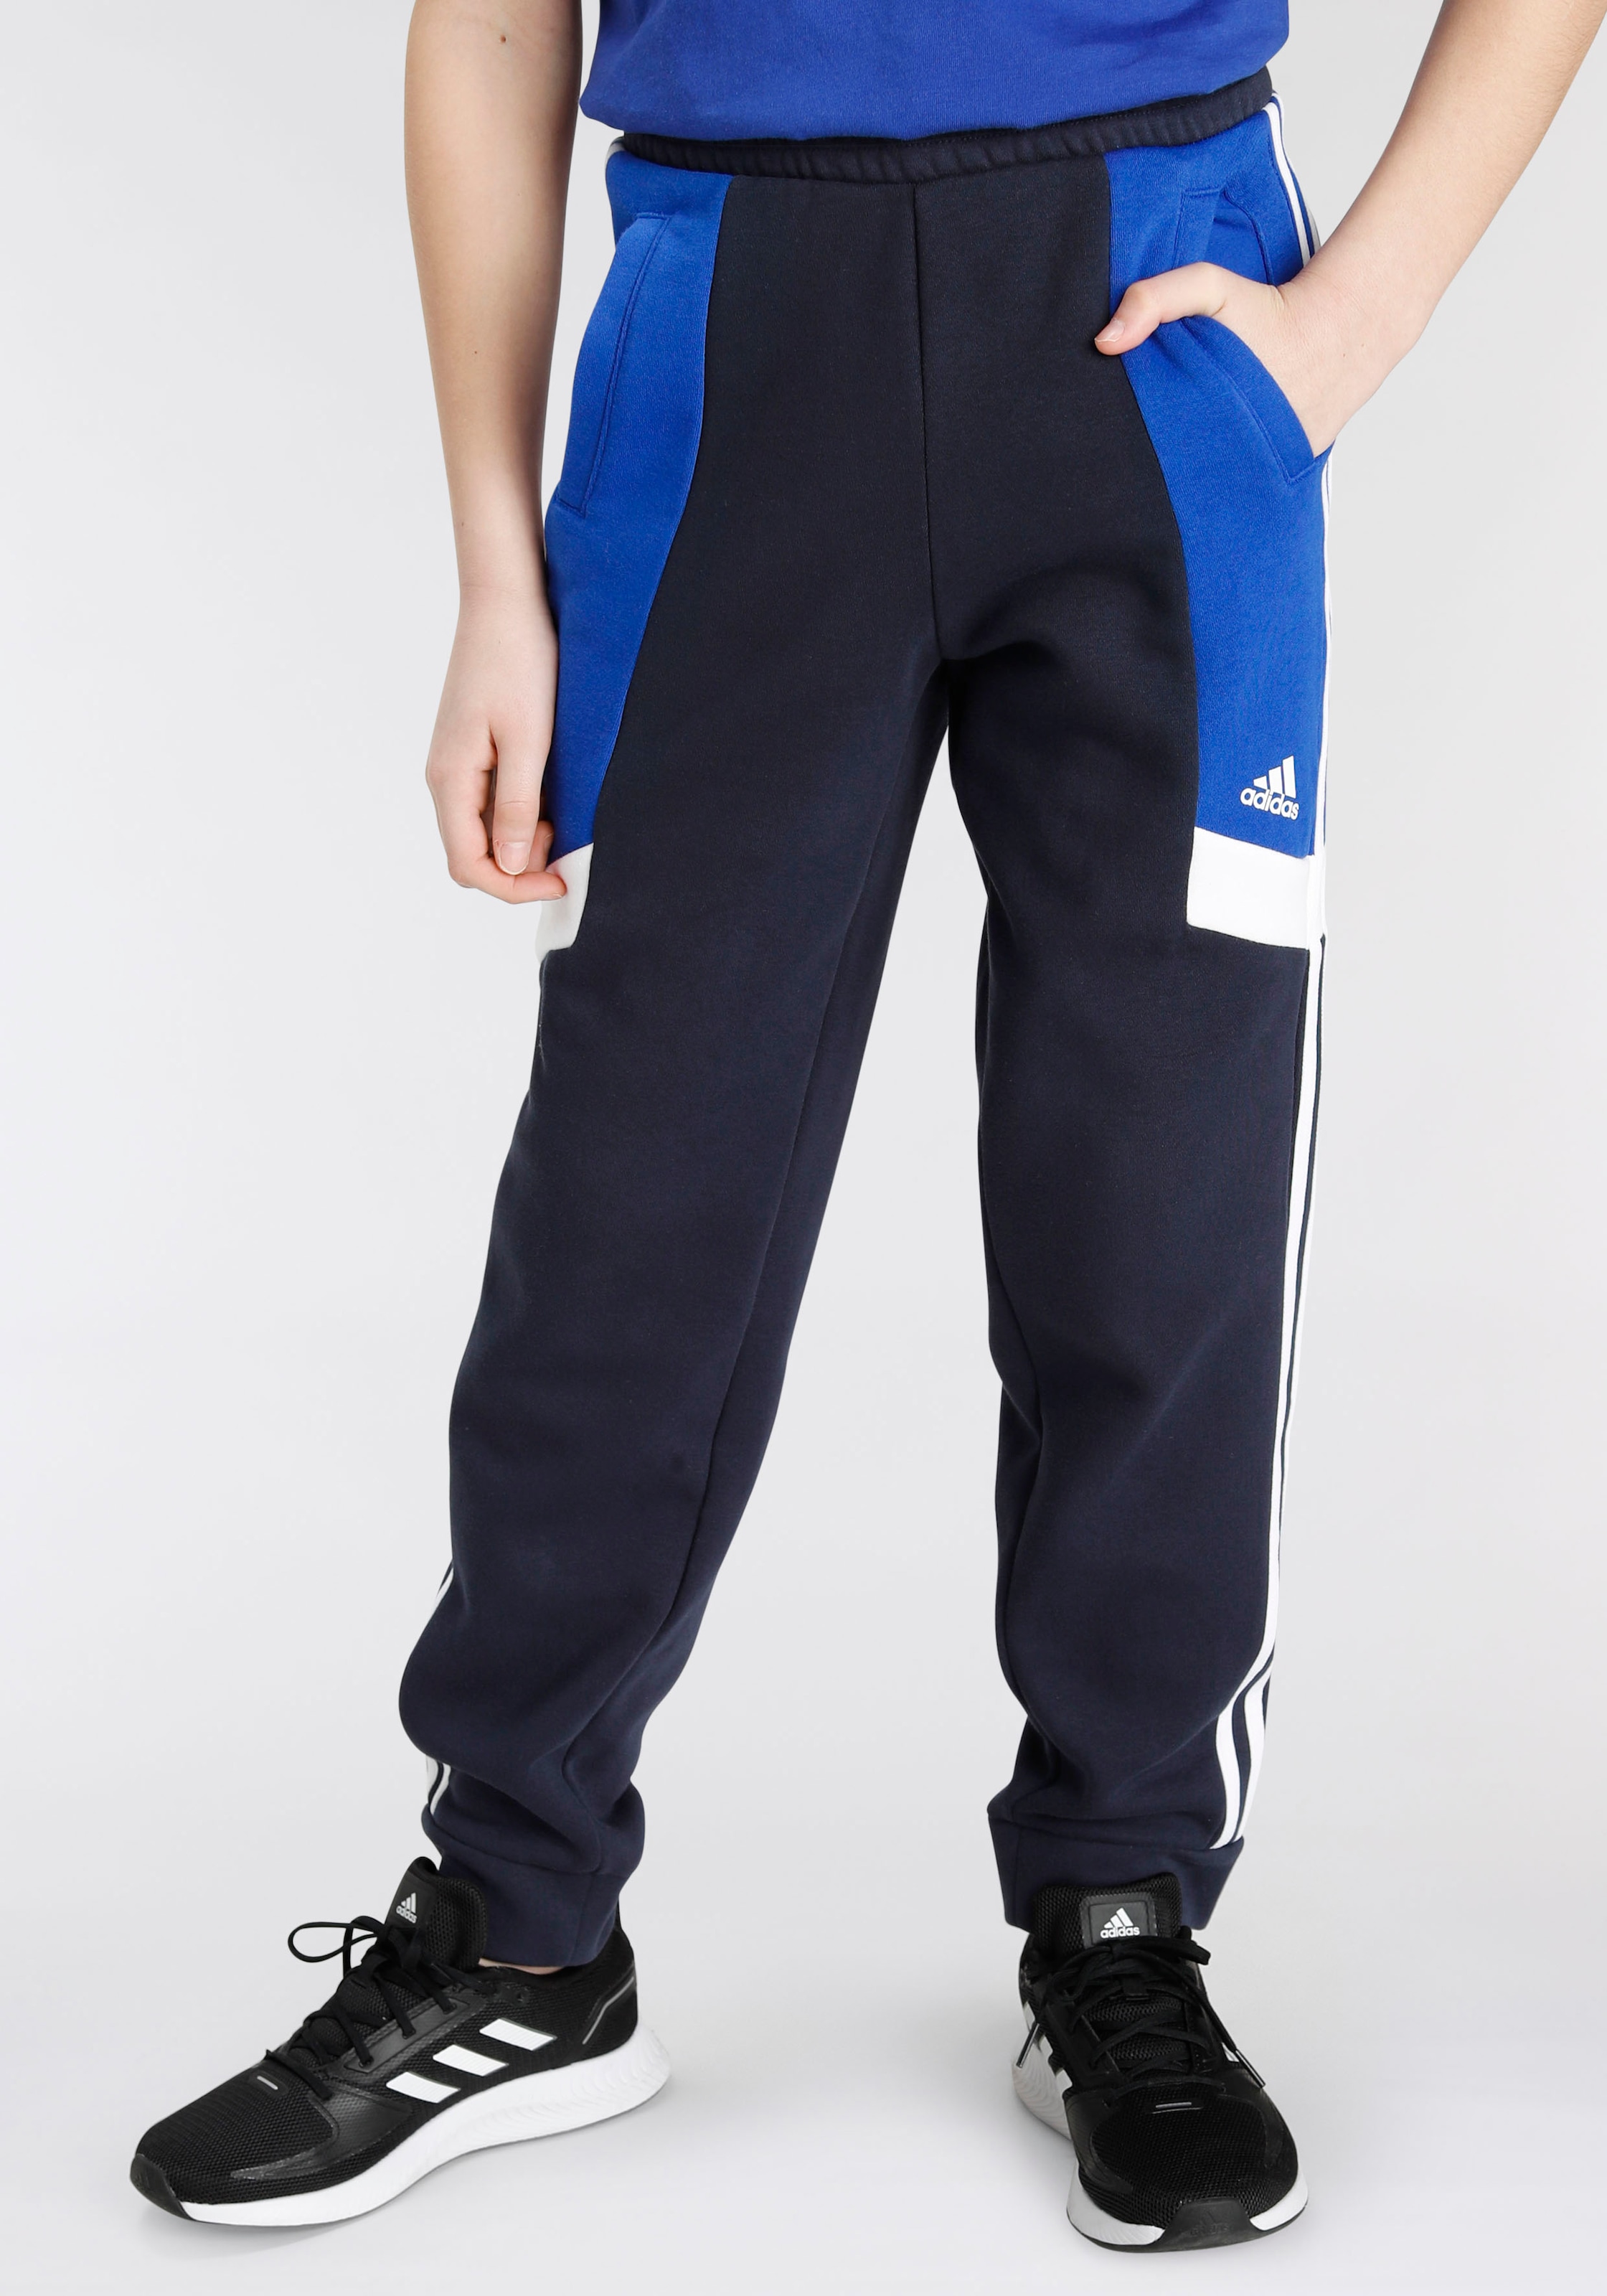 Shop Online im tlg.) »COLORBLOCK Sporthose (1 OTTO adidas HOSE«, 3STREIFEN Sportswear